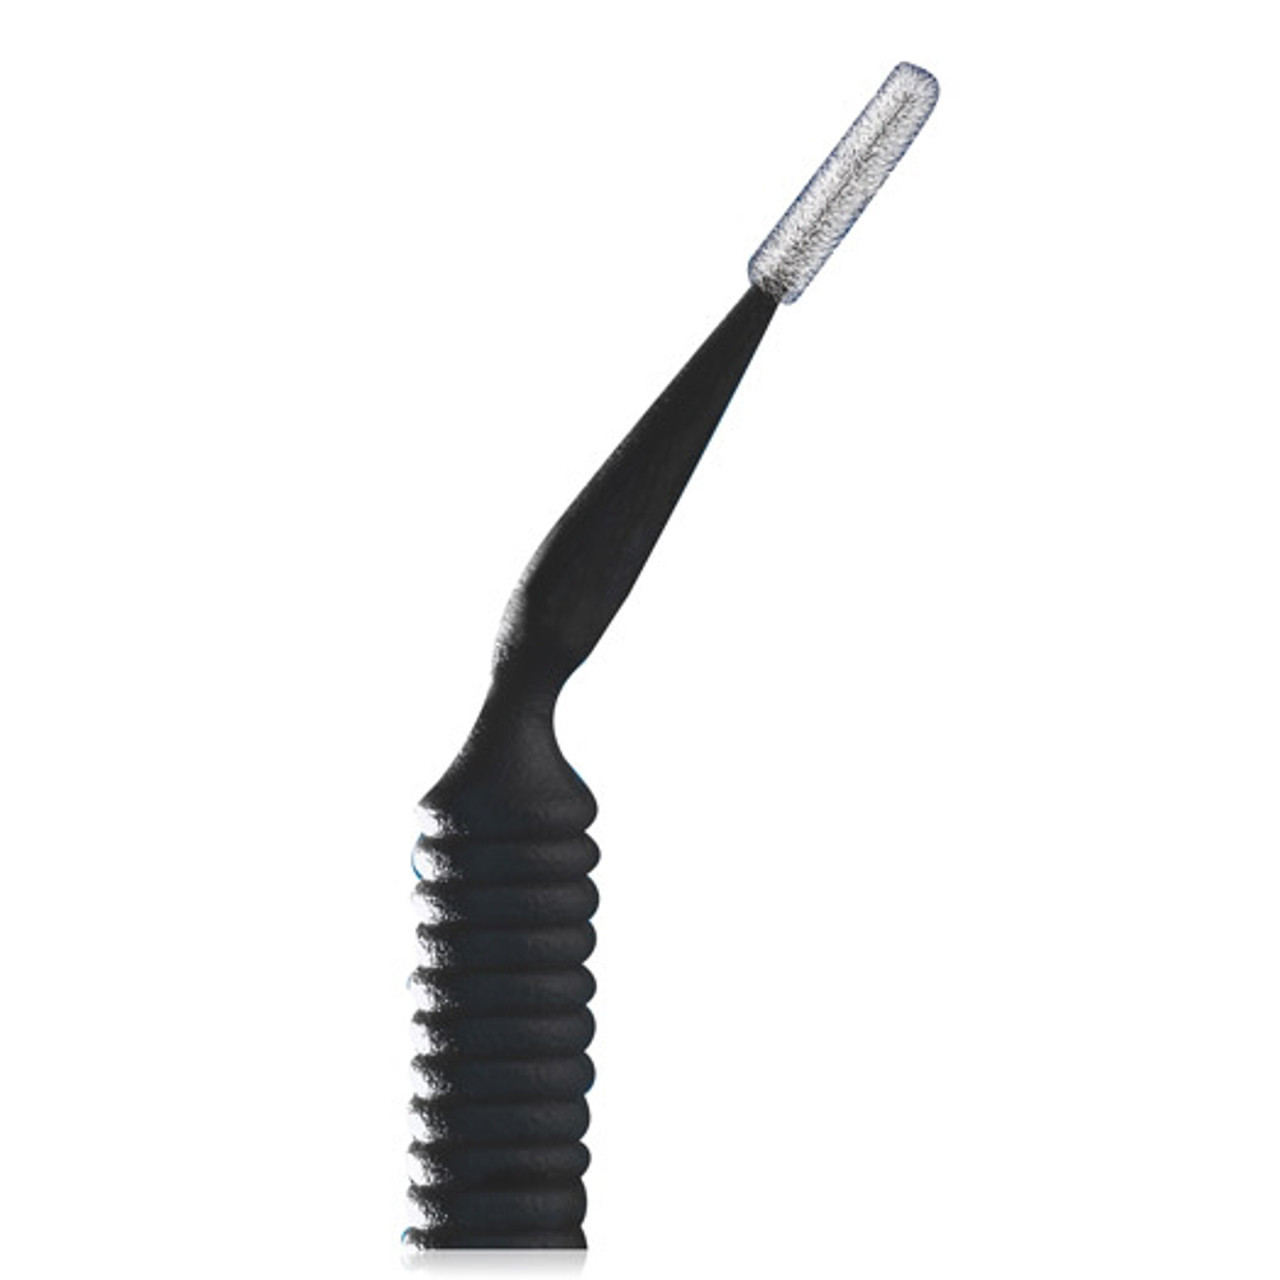 MicroBrush X Applicator Refill, Black 100/Box - Dental Wholesale Direct